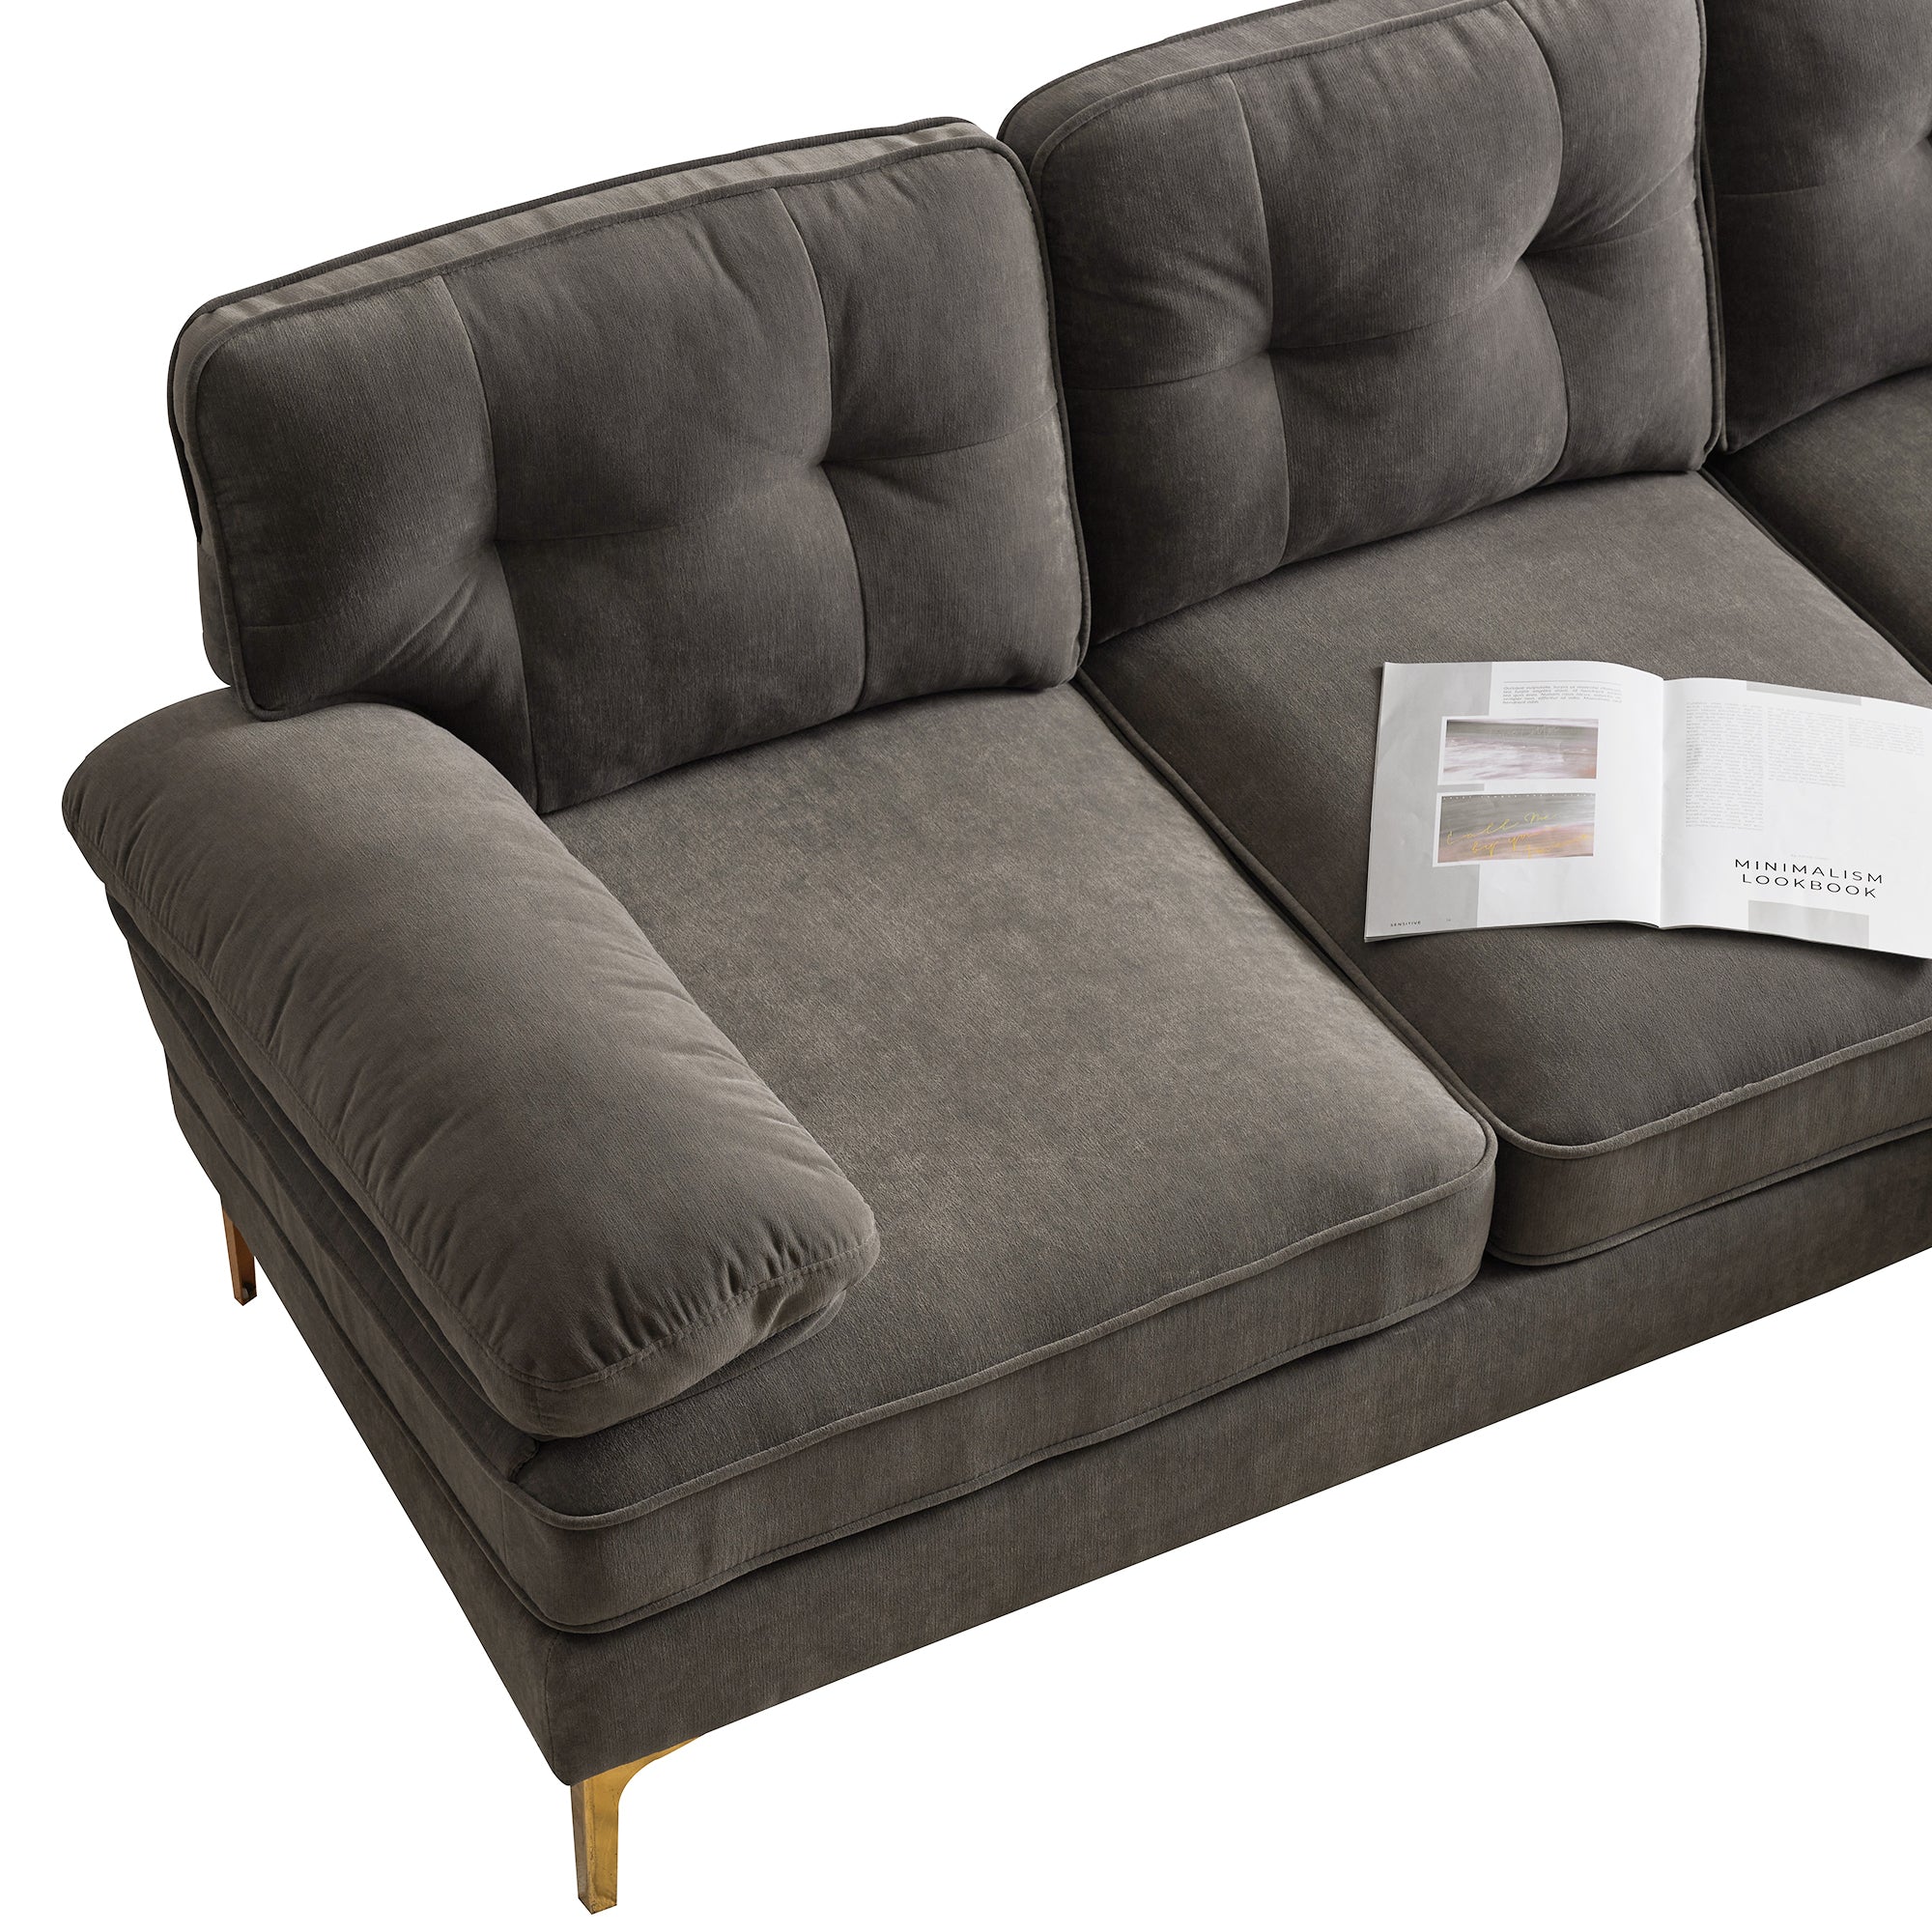 83" Modern Velvet L-Shaped Sectional Sofa for Living Room & Bedroom - Brown-Stationary Sectionals-American Furniture Outlet